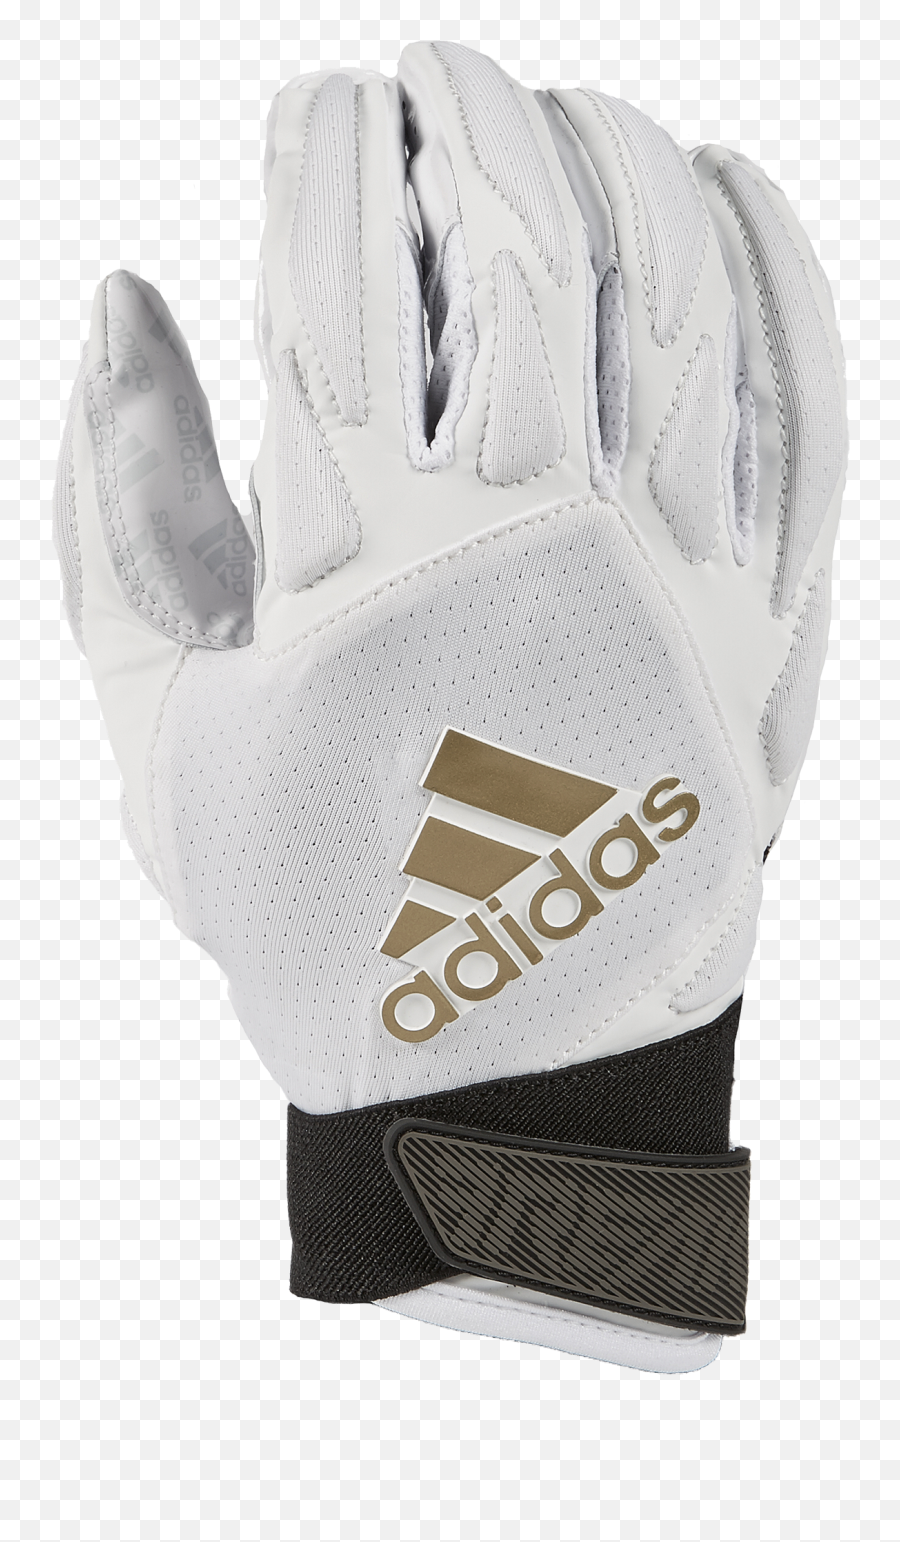 All Black Adidas Football Gloves Cheap Buy Online - Adidas Padded Football Gloves Emoji,Adidas Emoji Receiver Gloves